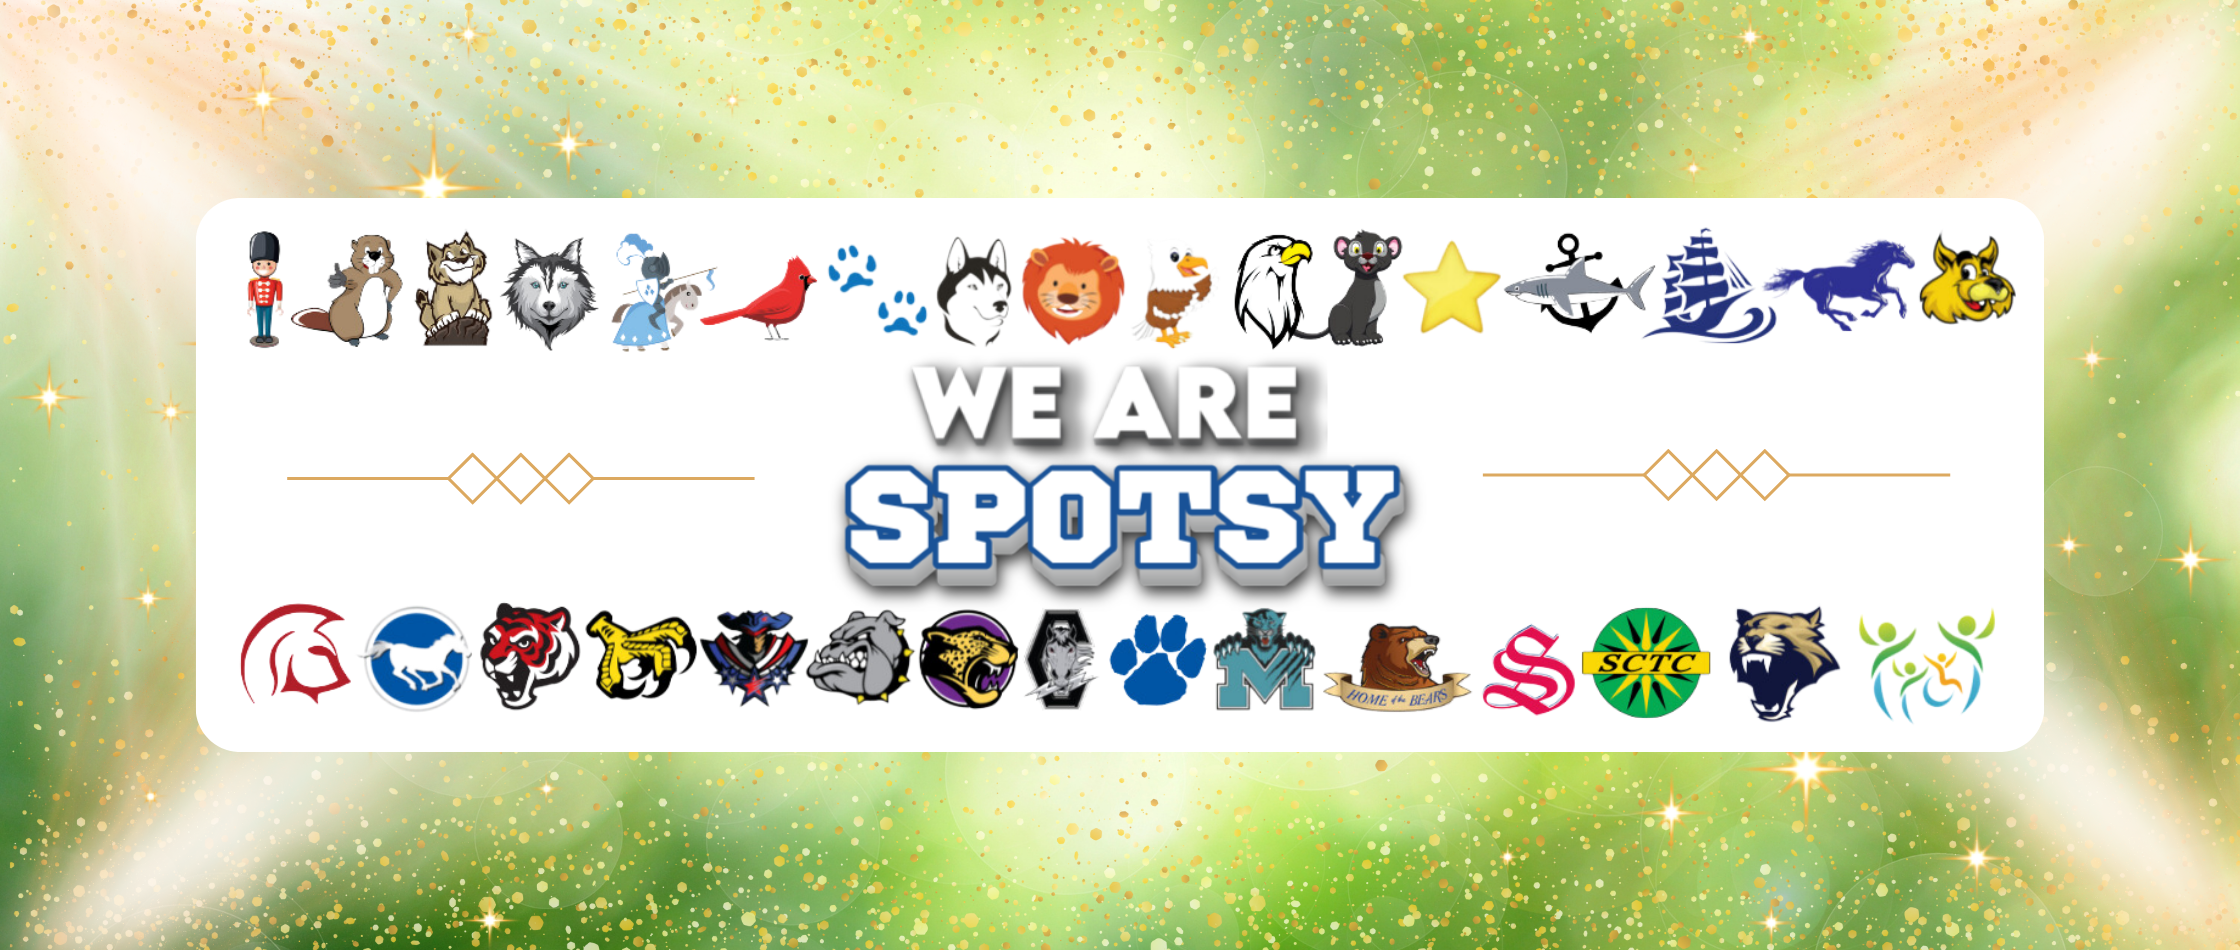 We Are Spotsy